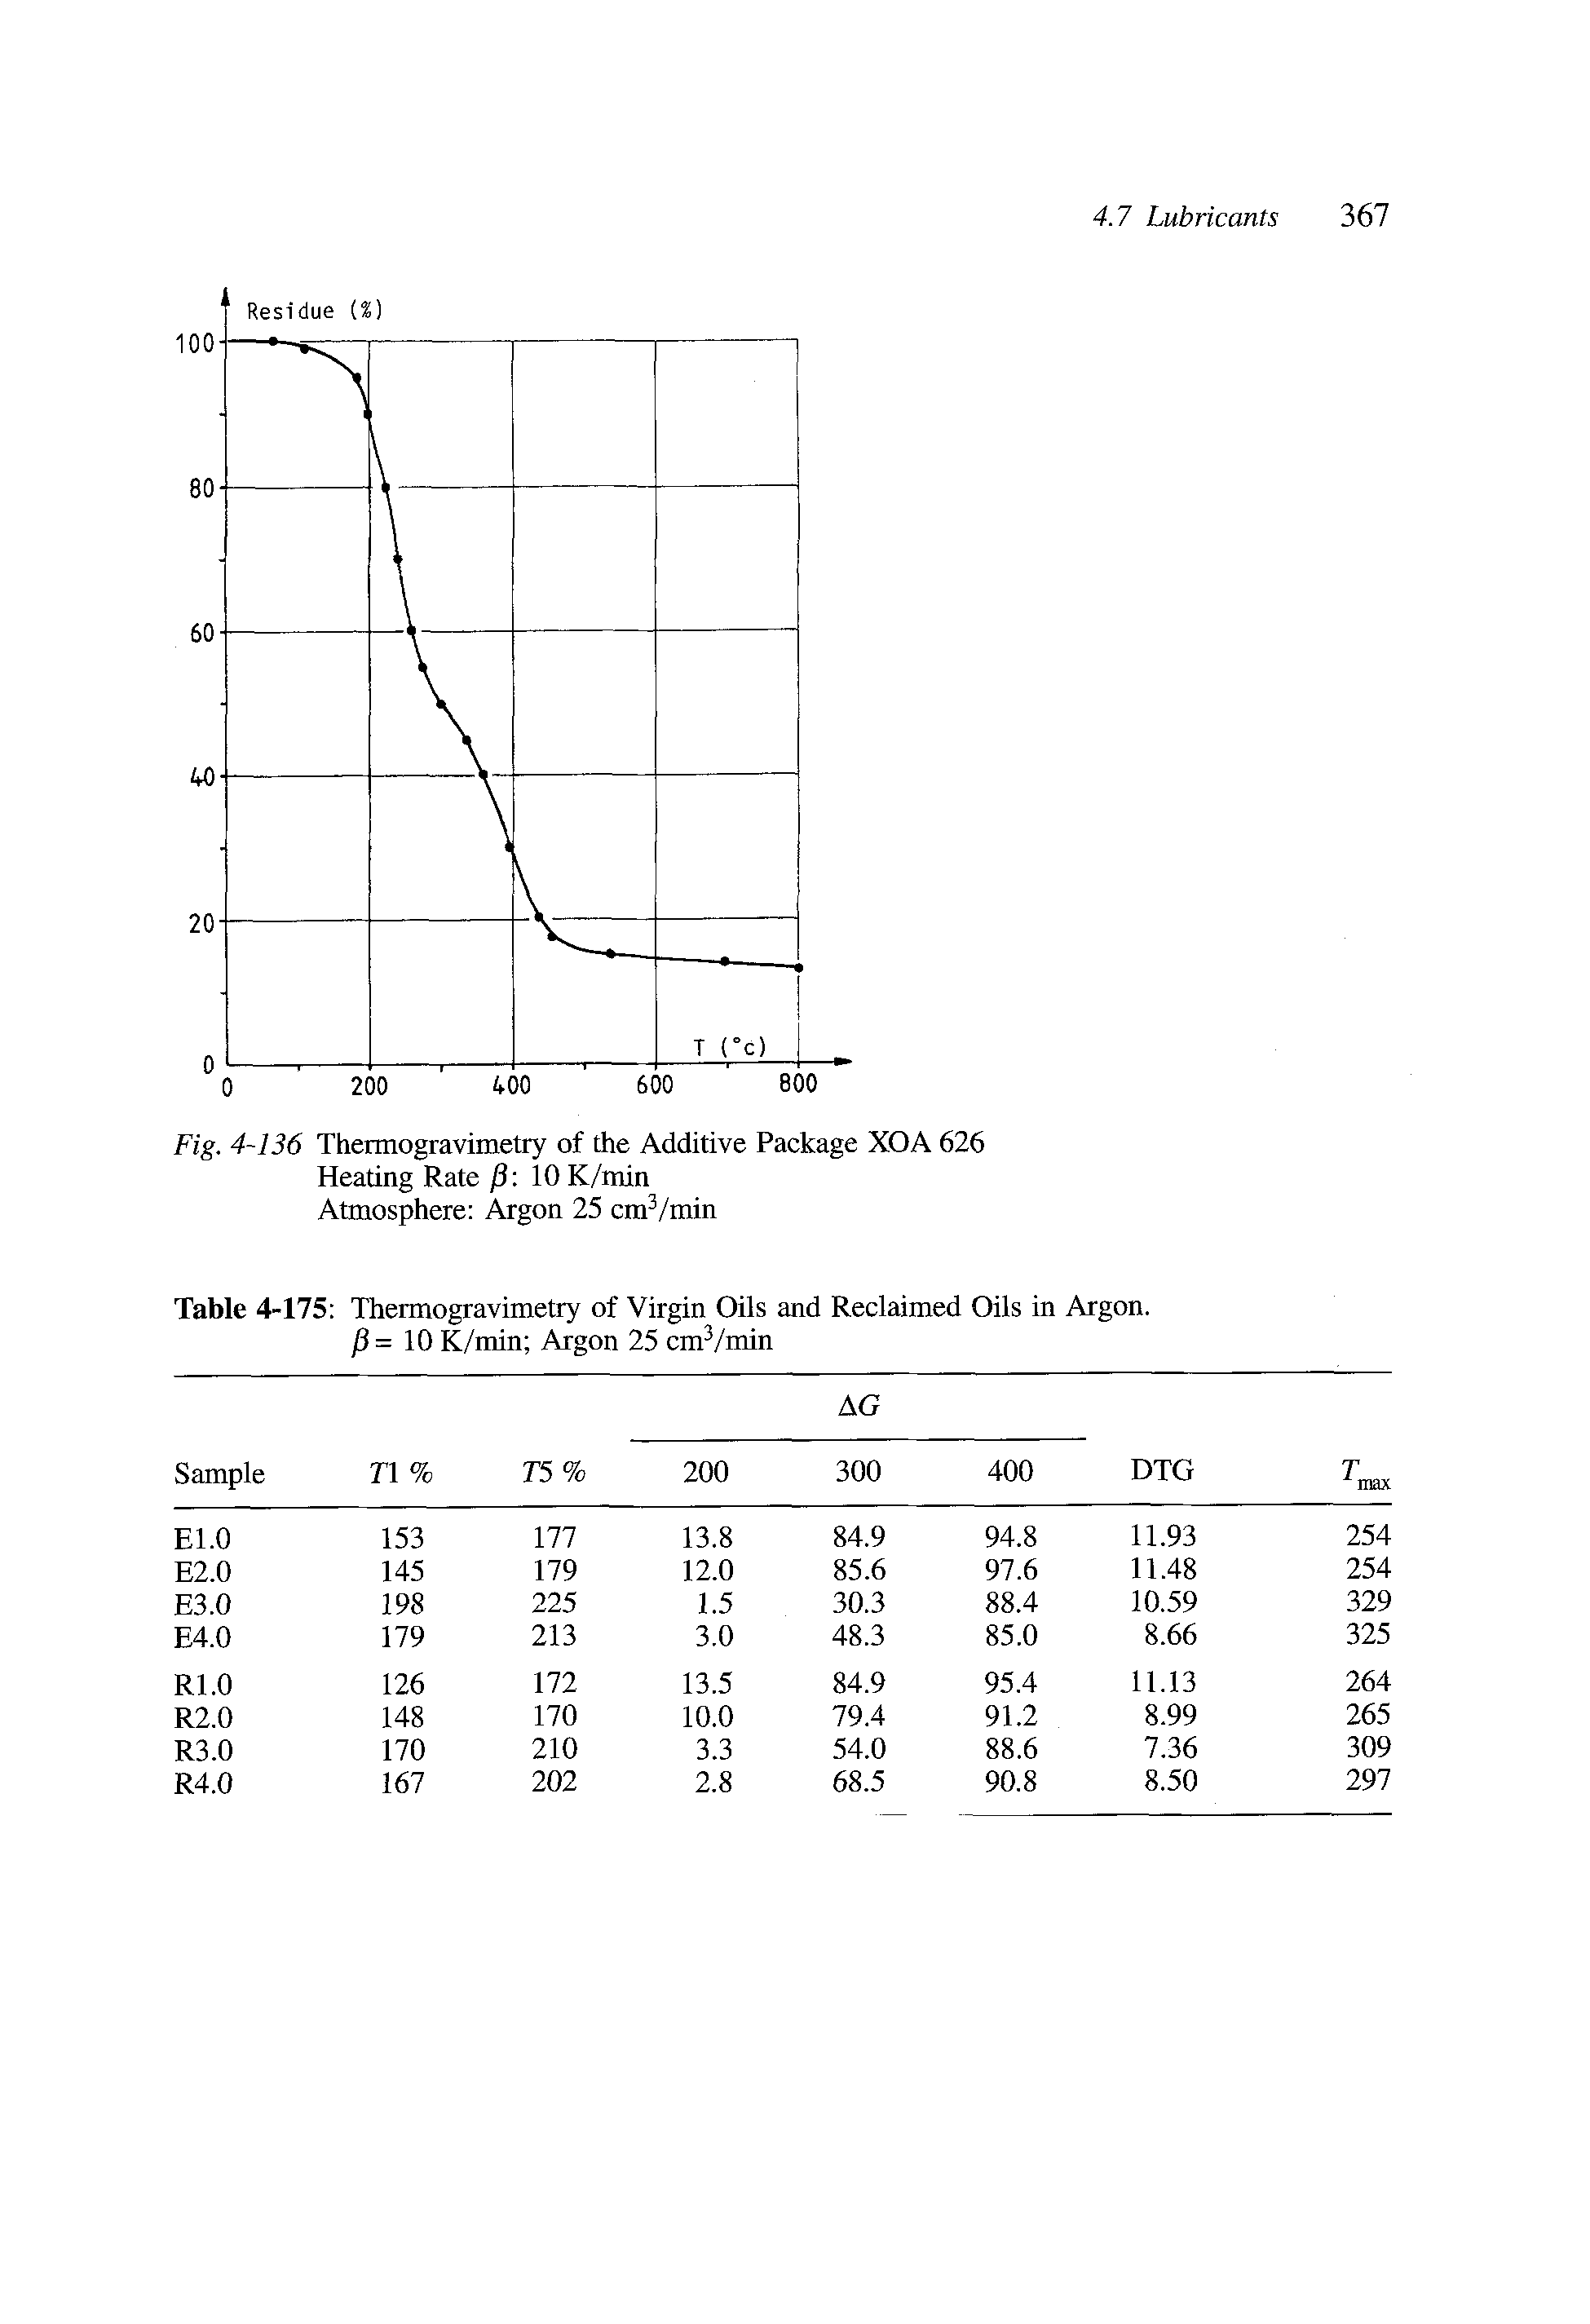 Table 4-175 Thermogravimetry of Virgin Oils and Reclaimed Oils in Argon. /3 = 10 K/min Argon 25 cm /min...